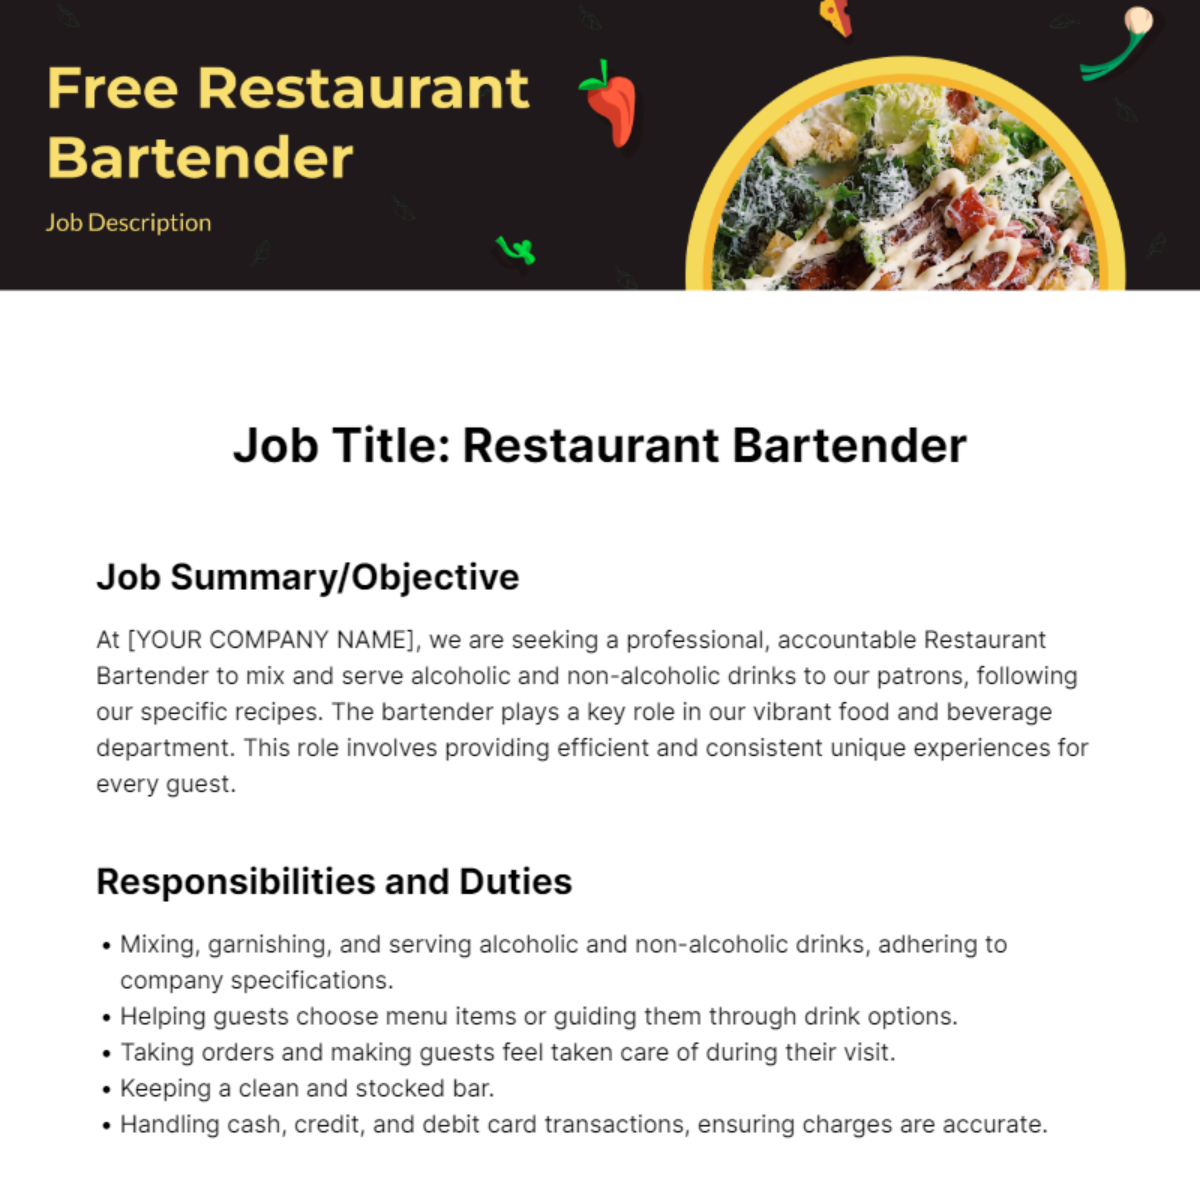 Free Restaurant Bartender Job Description Template